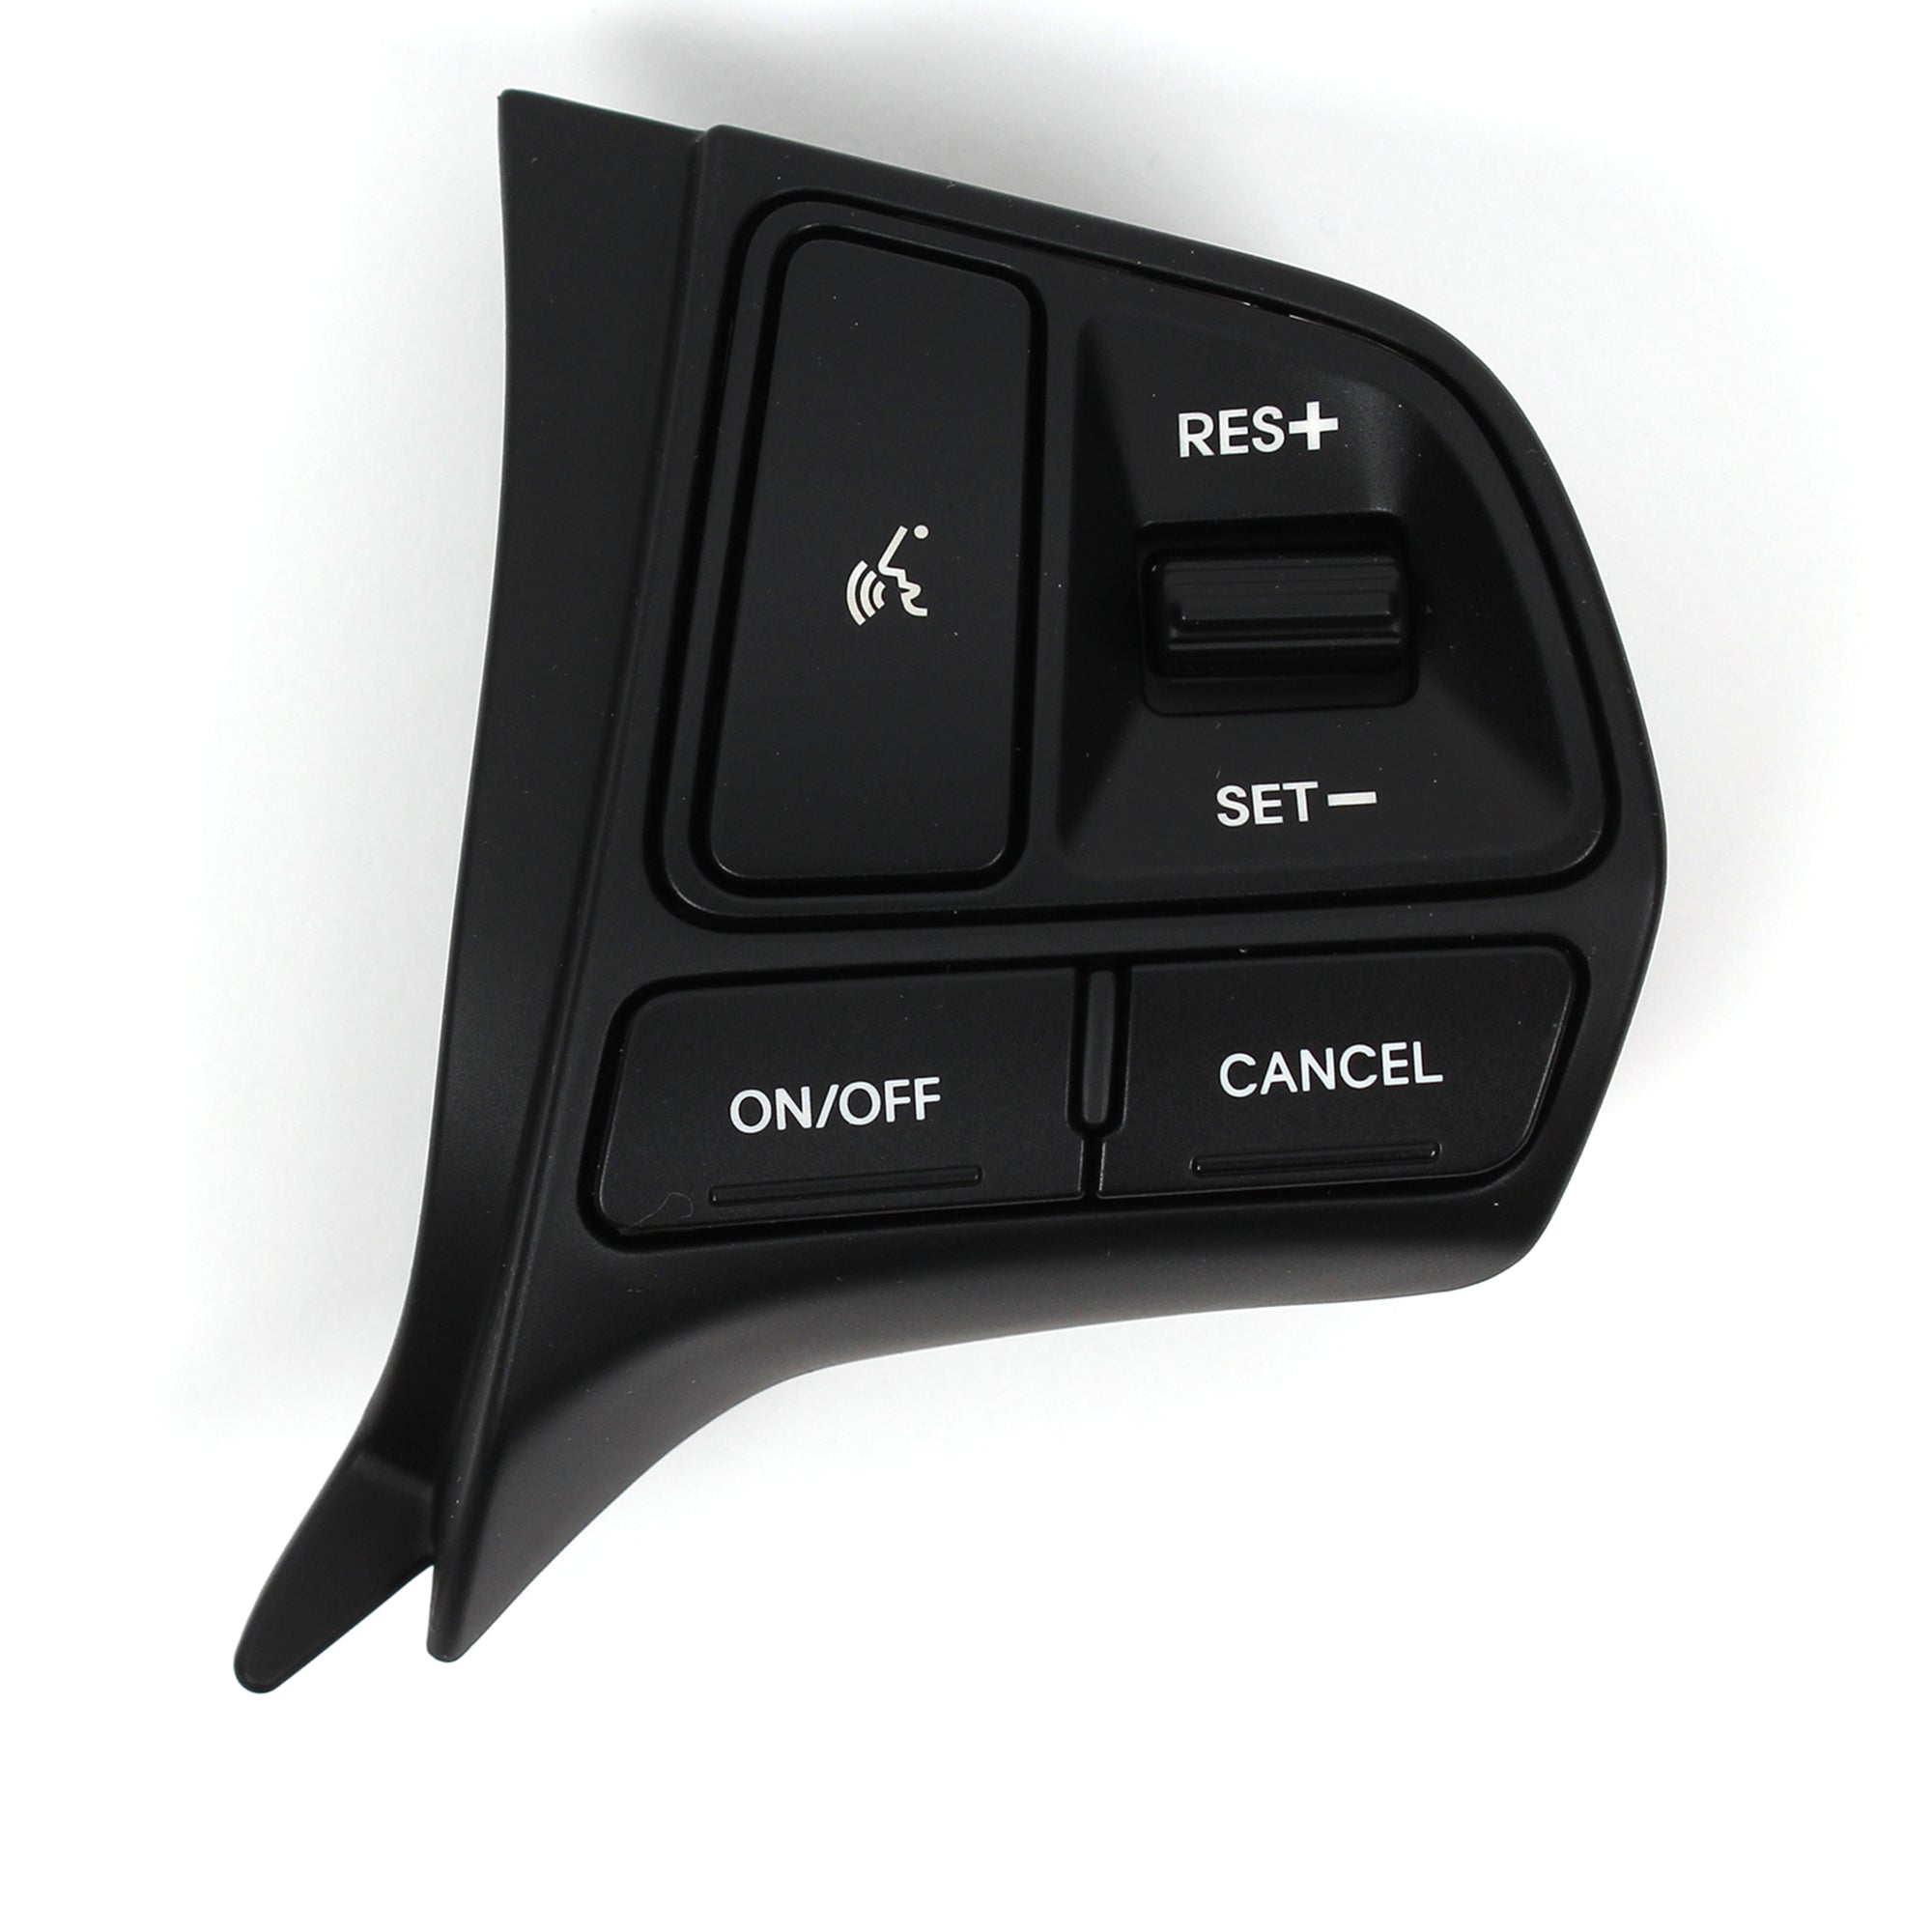 GENUINE Steering Remote Control Switch for 12-14 Kia Rio OEM 96700-1W510CA